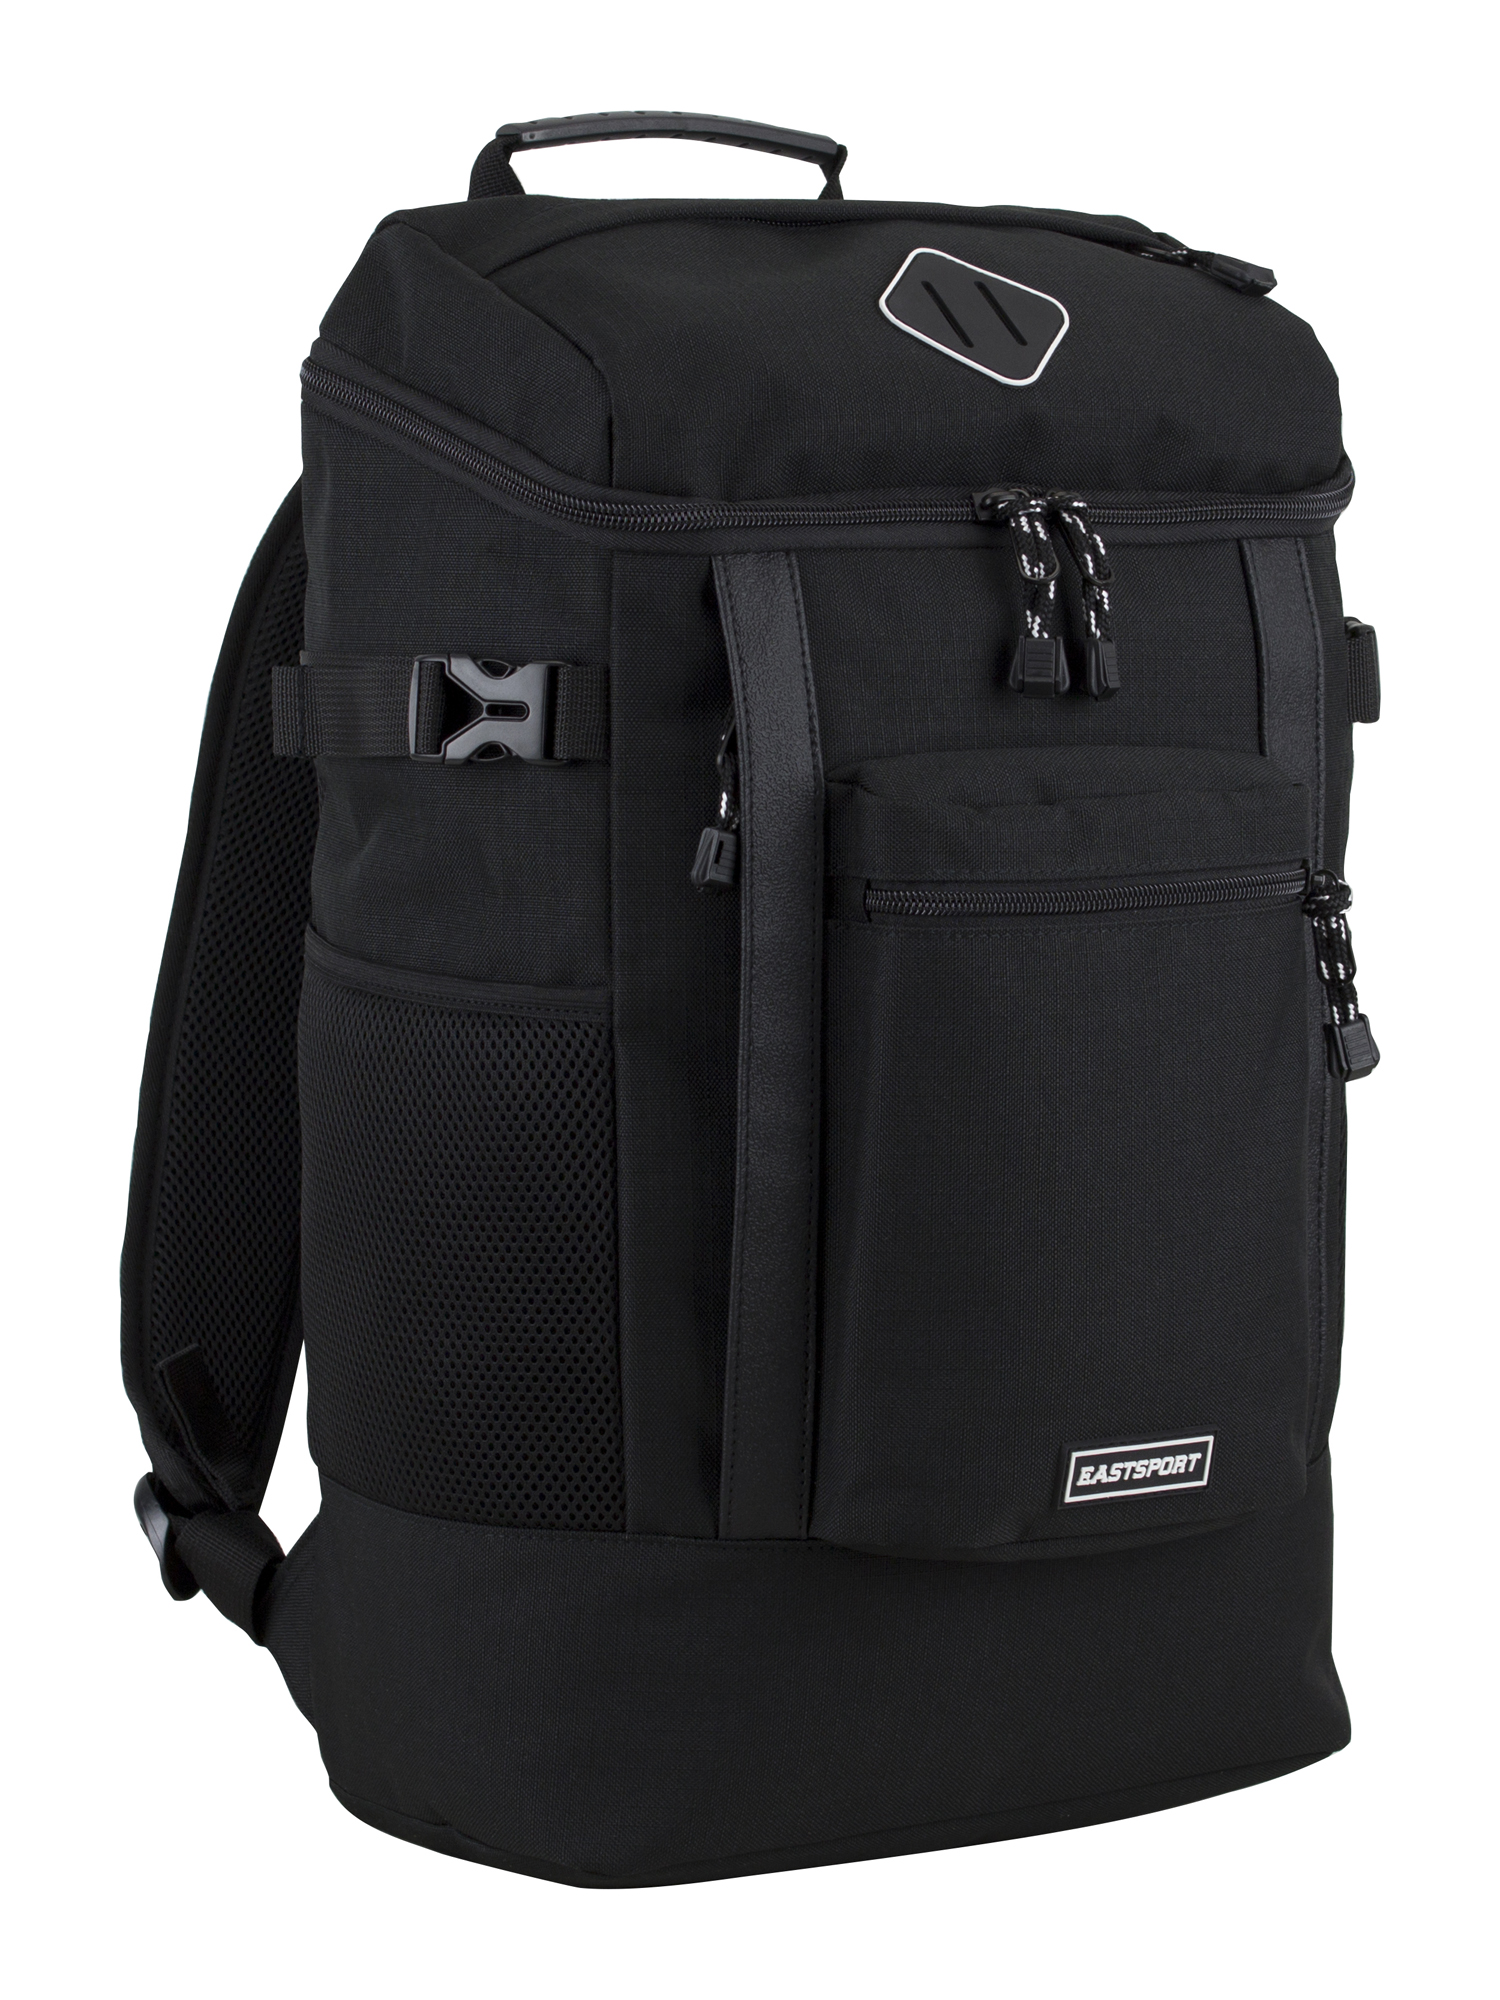 Eastsport Unisex Rival 18.5" Laptop Backpack, Black - image 1 of 9